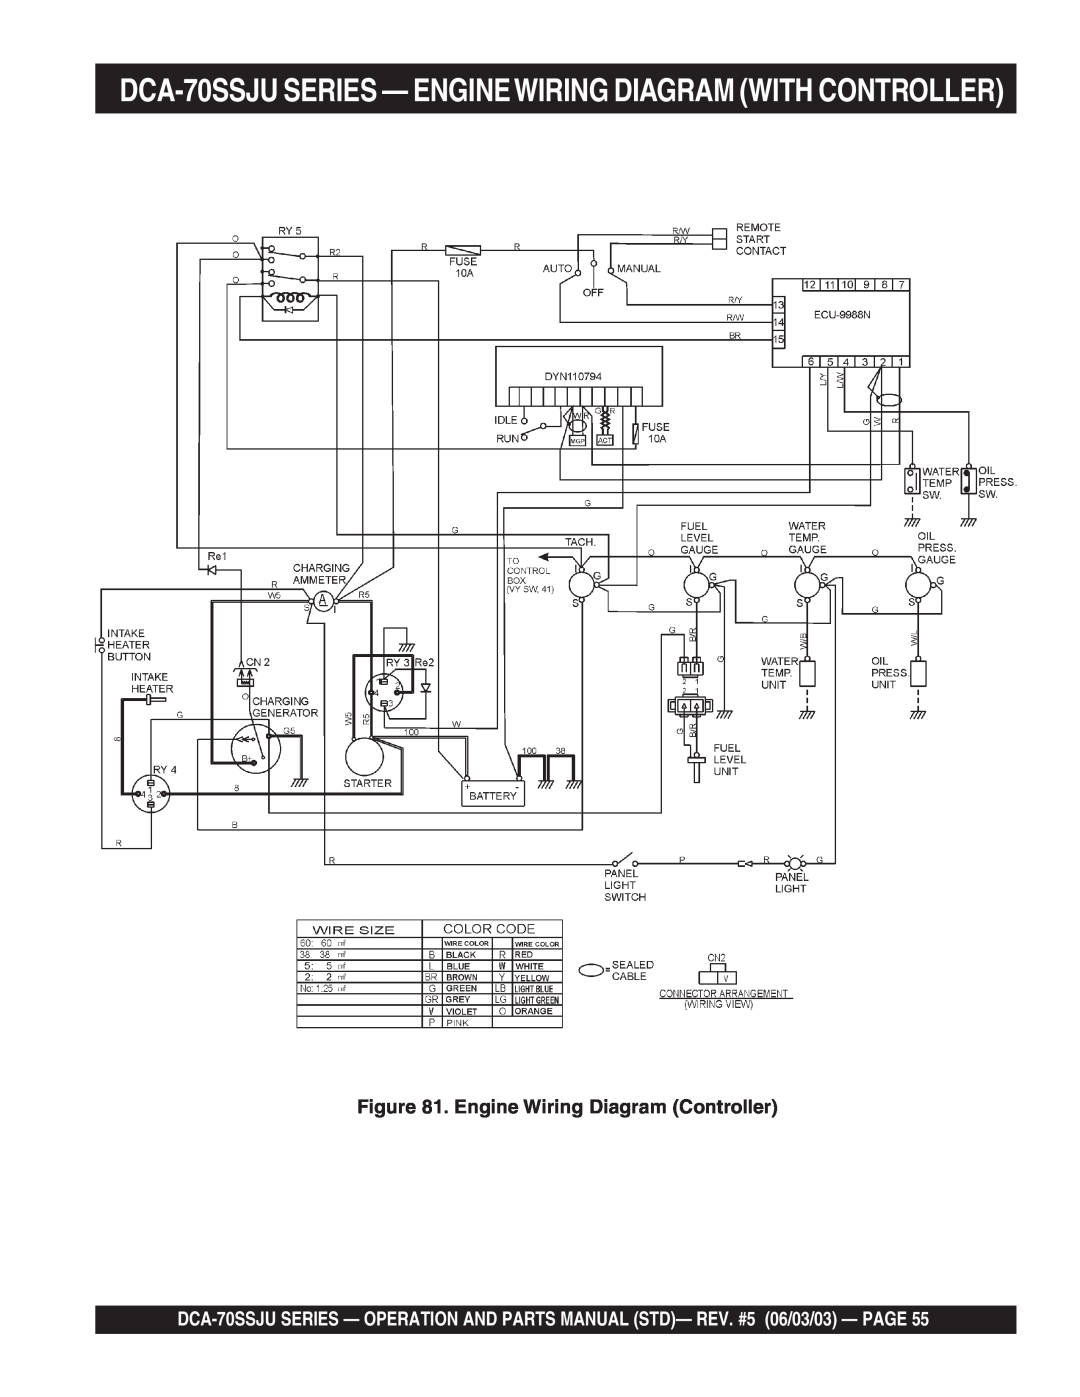 Multiquip DCA-70SSJU operation manual Engine Wiring Diagram Controller 